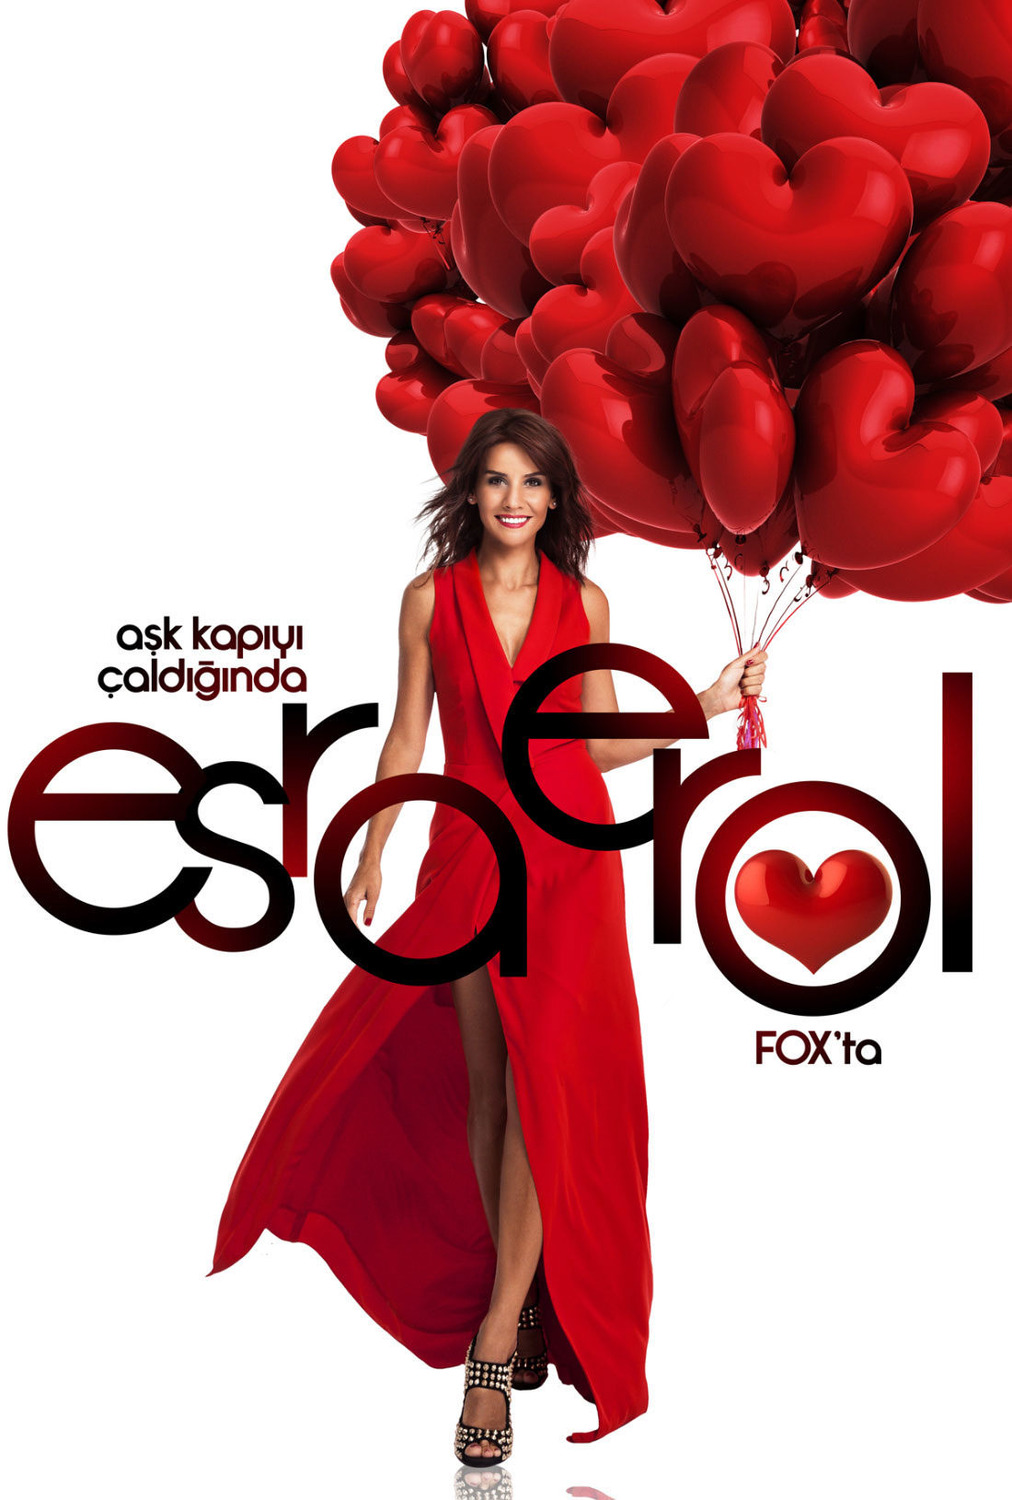 Extra Large TV Poster Image for Esra Erol 